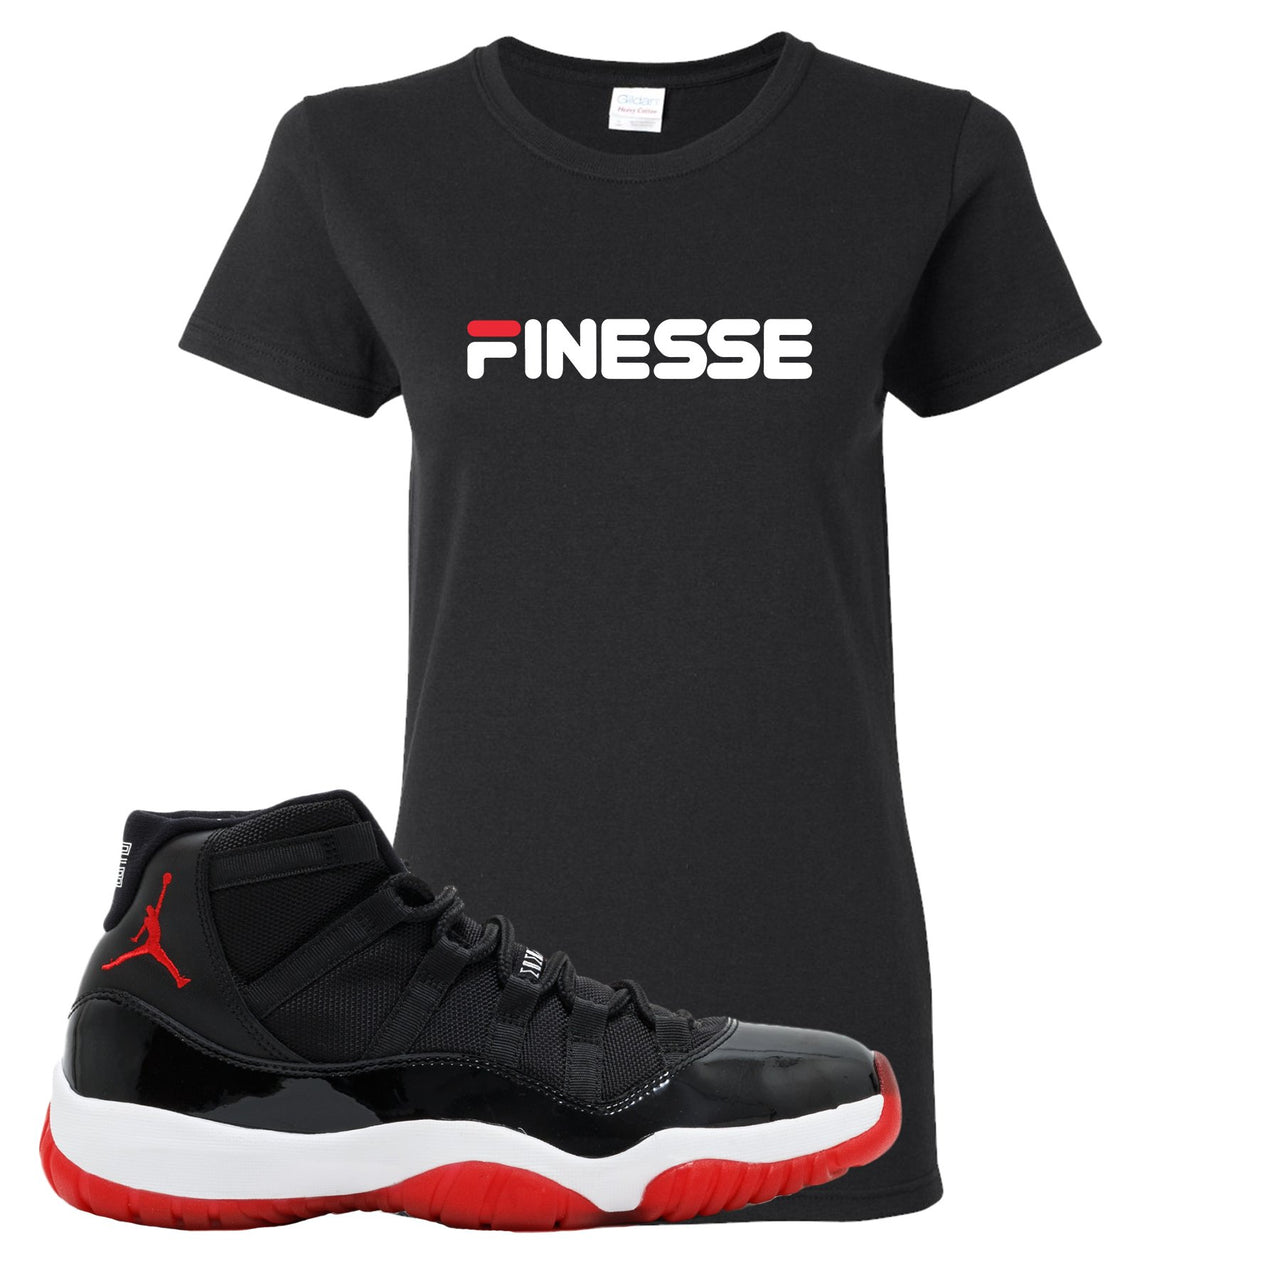 Jordan 11 Bred Finesse Black Sneaker Hook Up Women's T-Shirt